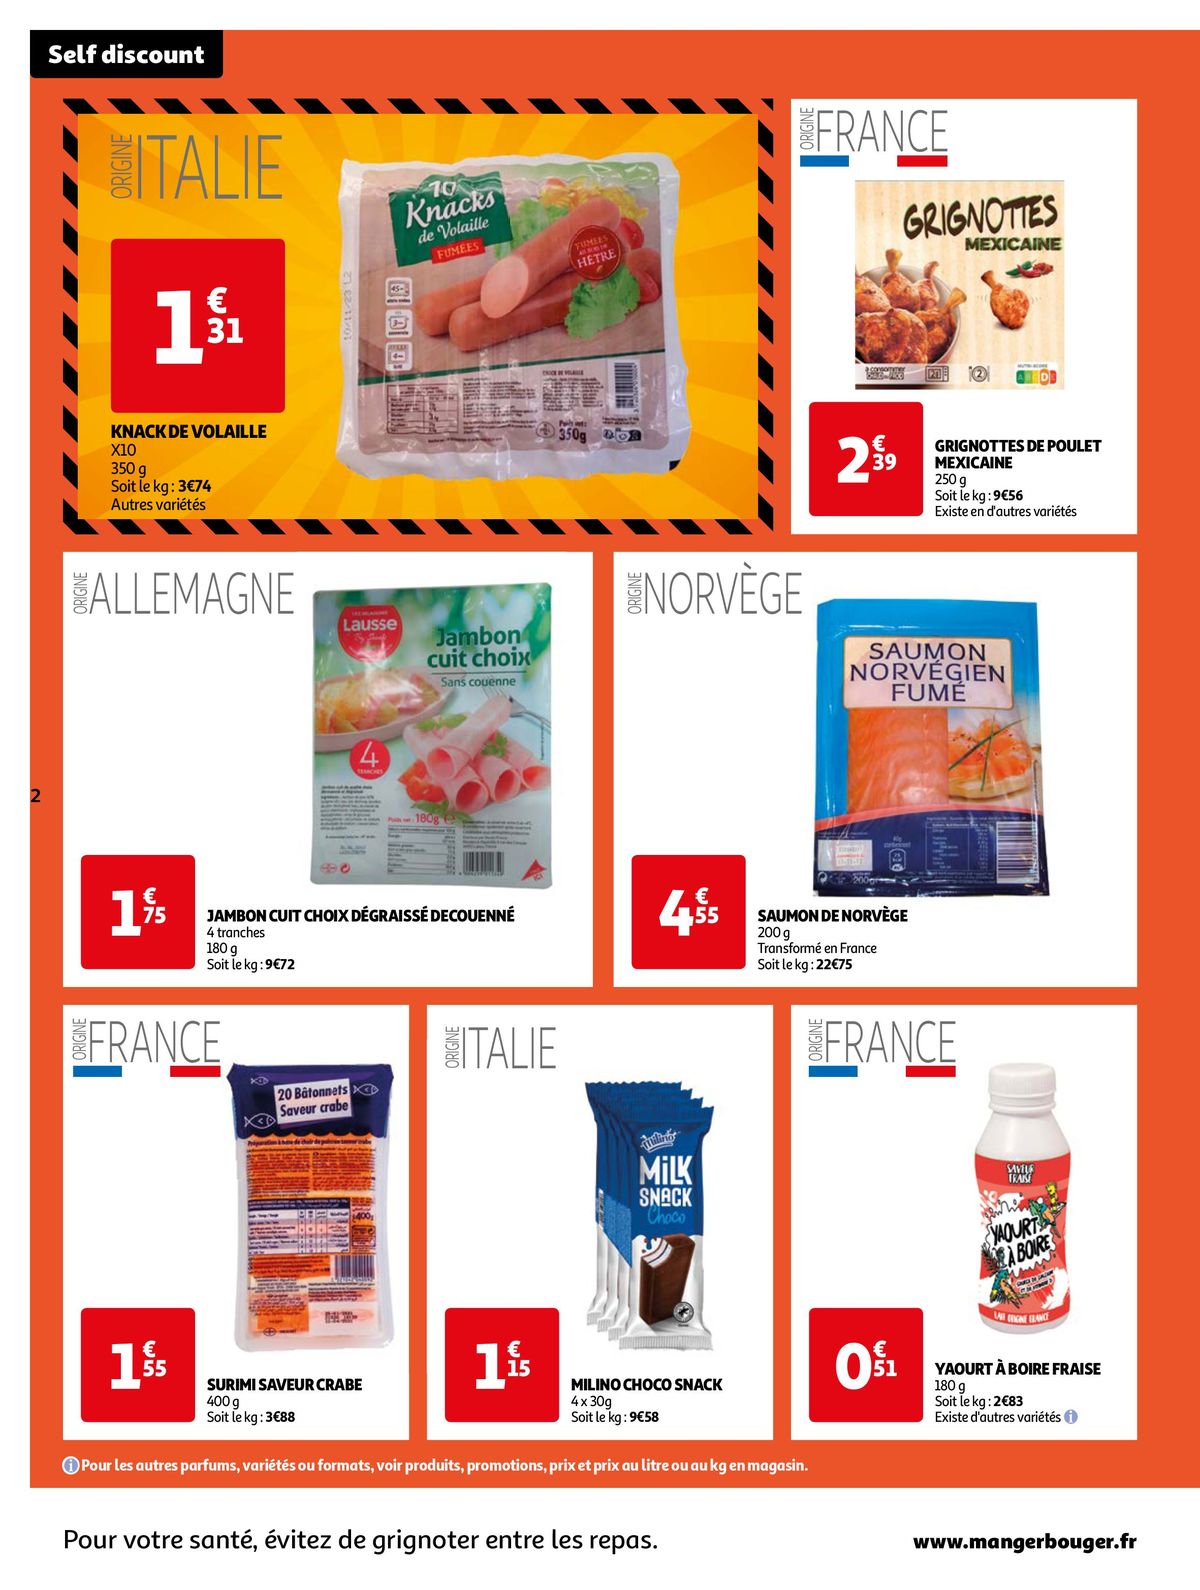 Catalogue Les offres self discount d'octobre, page 00002